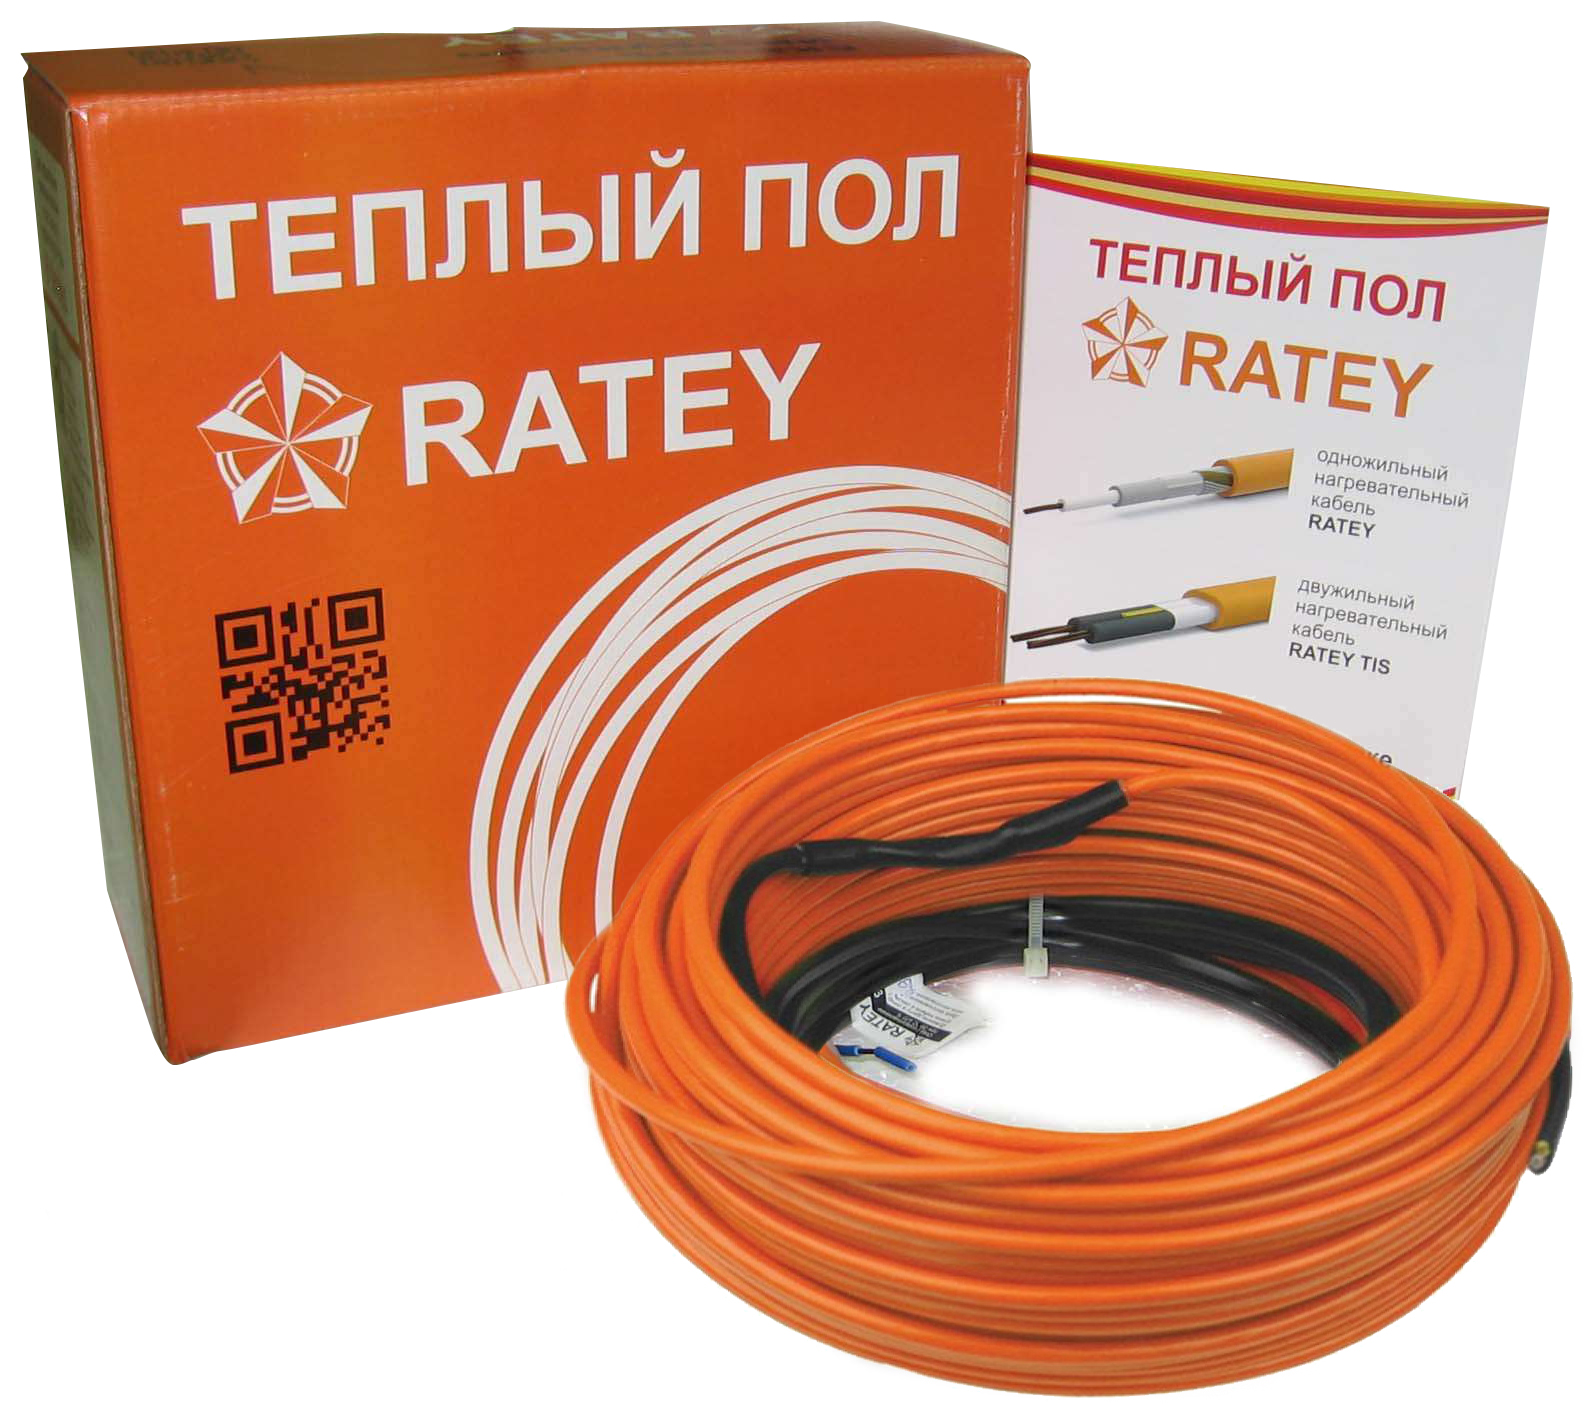 Электрический теплый пол Ratey RD1 0.400